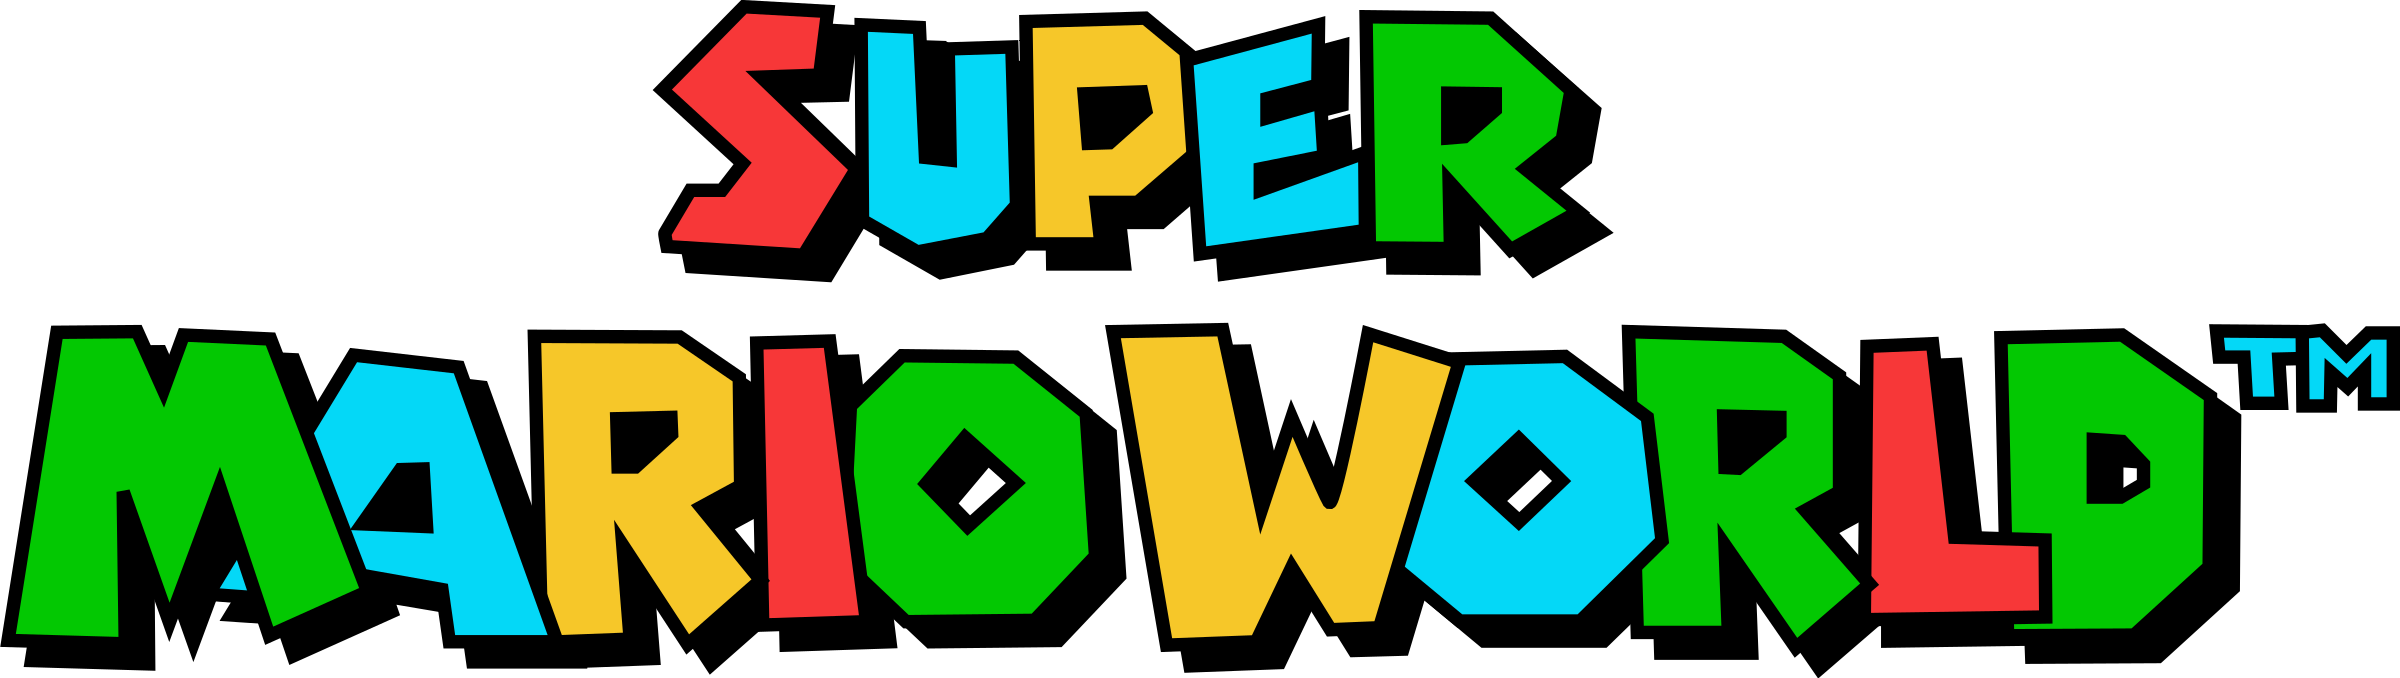 Super Mario World Logo Black And White - Super Mario Bros World Png (2400x678)